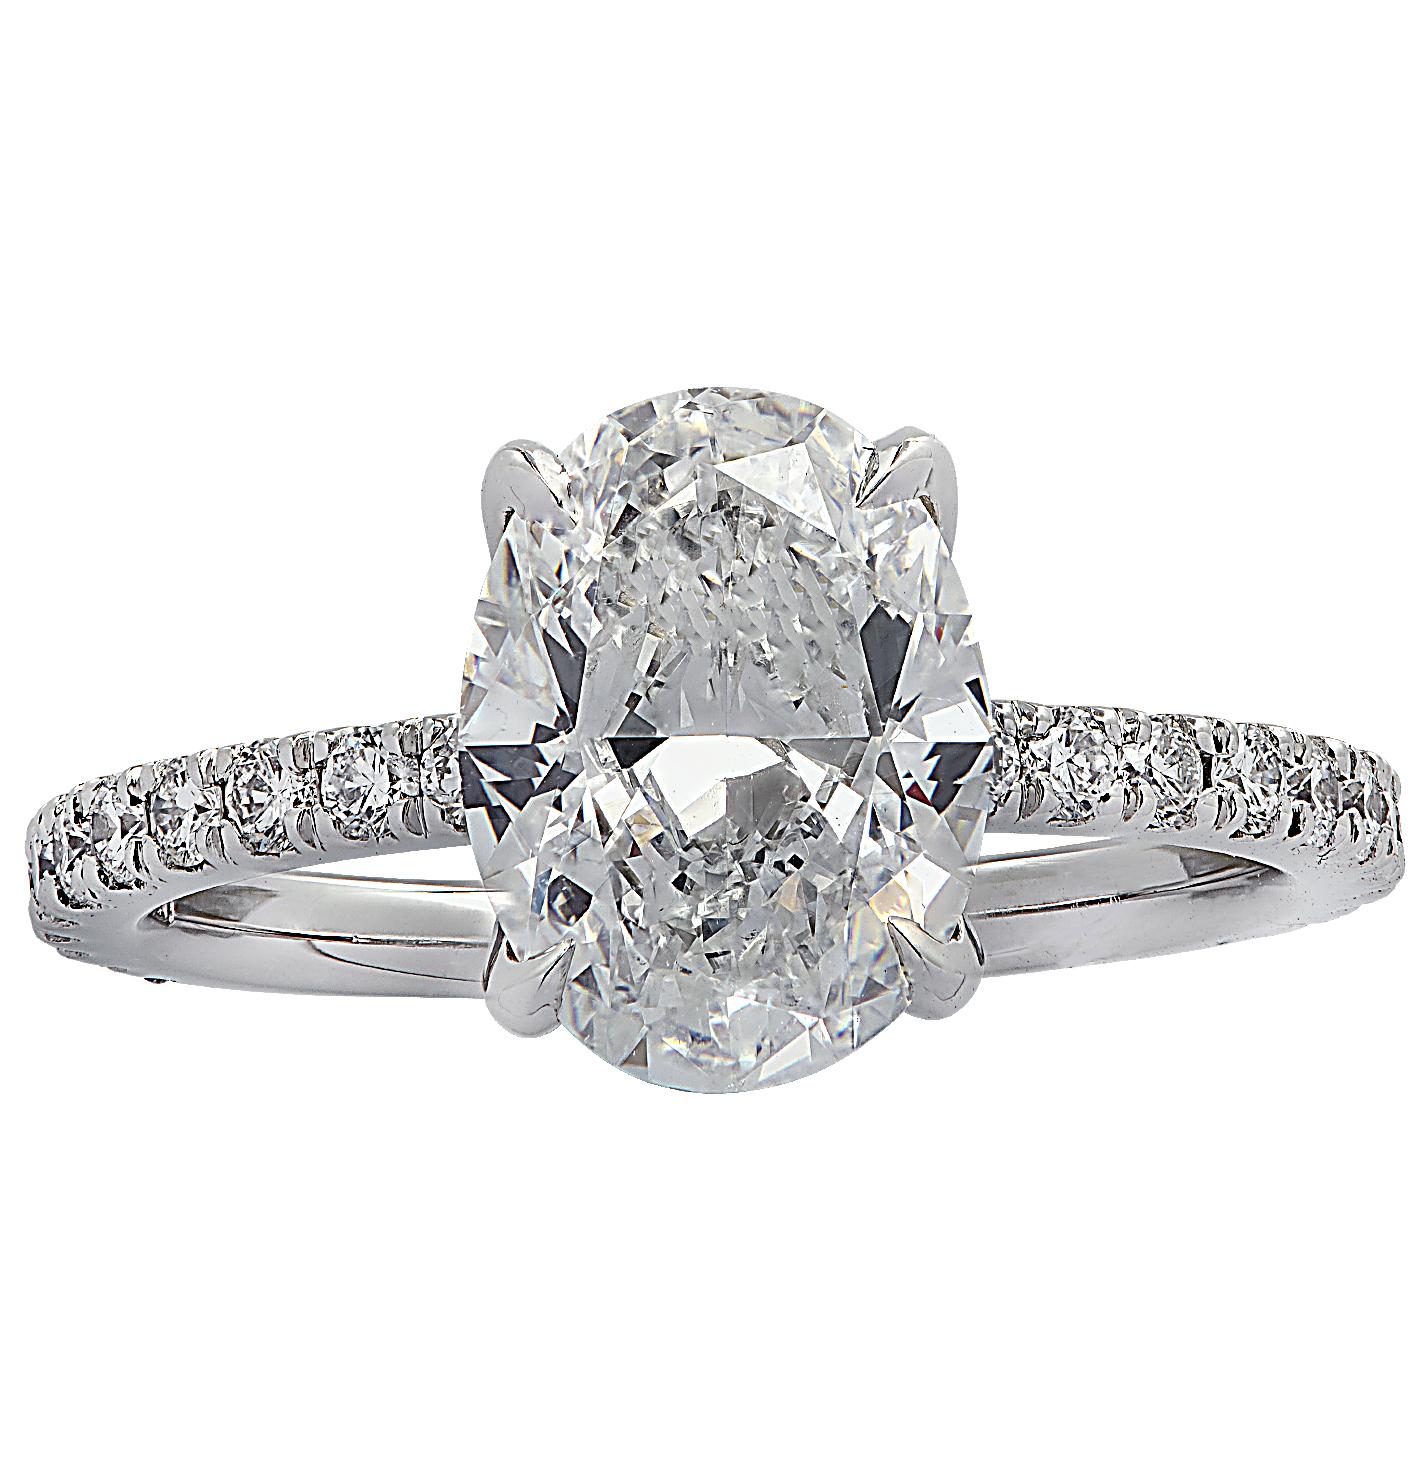 Modern Vivid Diamonds GIA Certified 2.01 Carat Oval Cut Diamond Engagement Ring